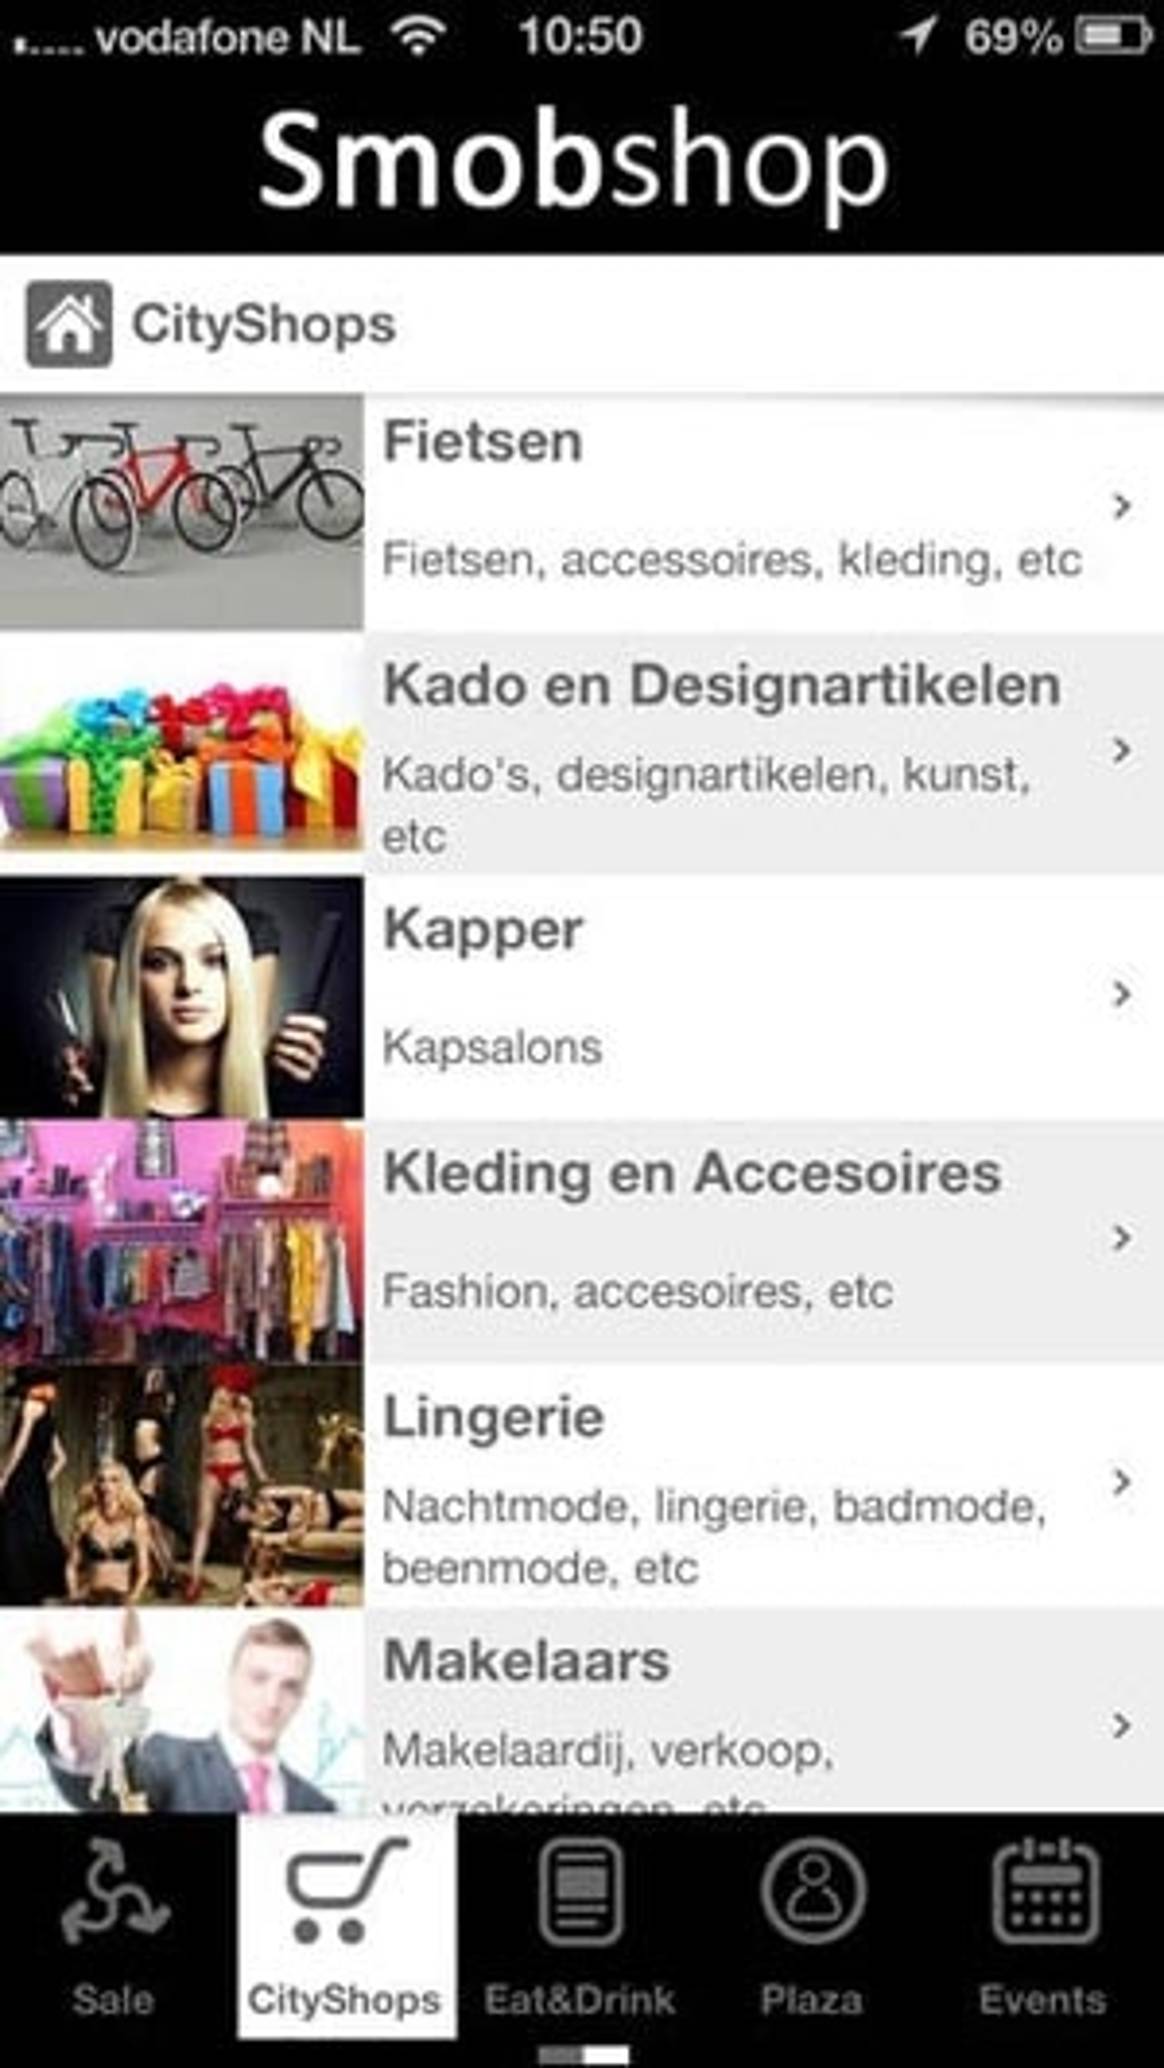 24 uur per dag online shoppen in Zwolle via Smobshop-app